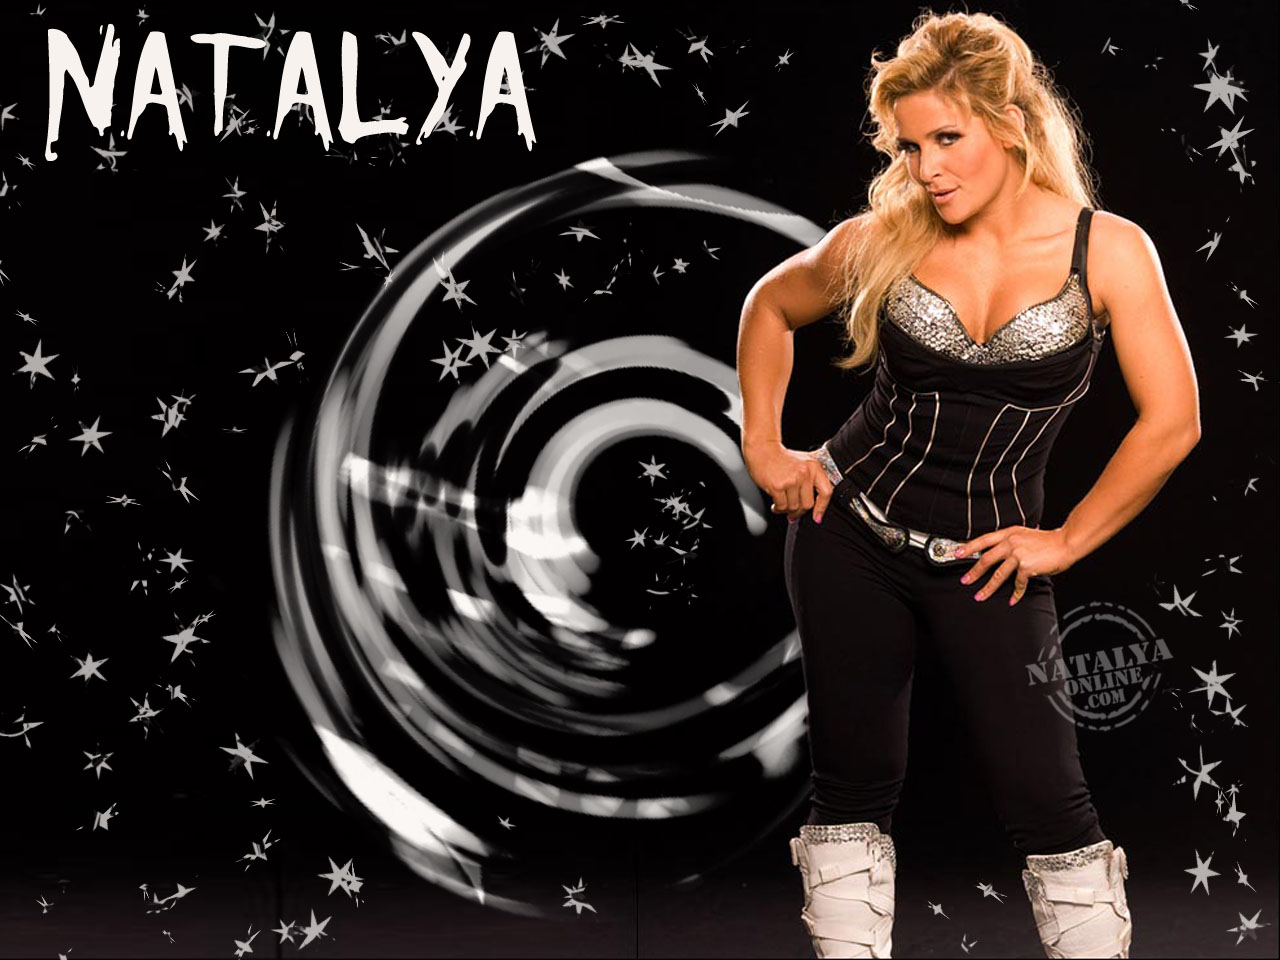 Wwe Natalya HD Wallpaper Wrestling All Stars